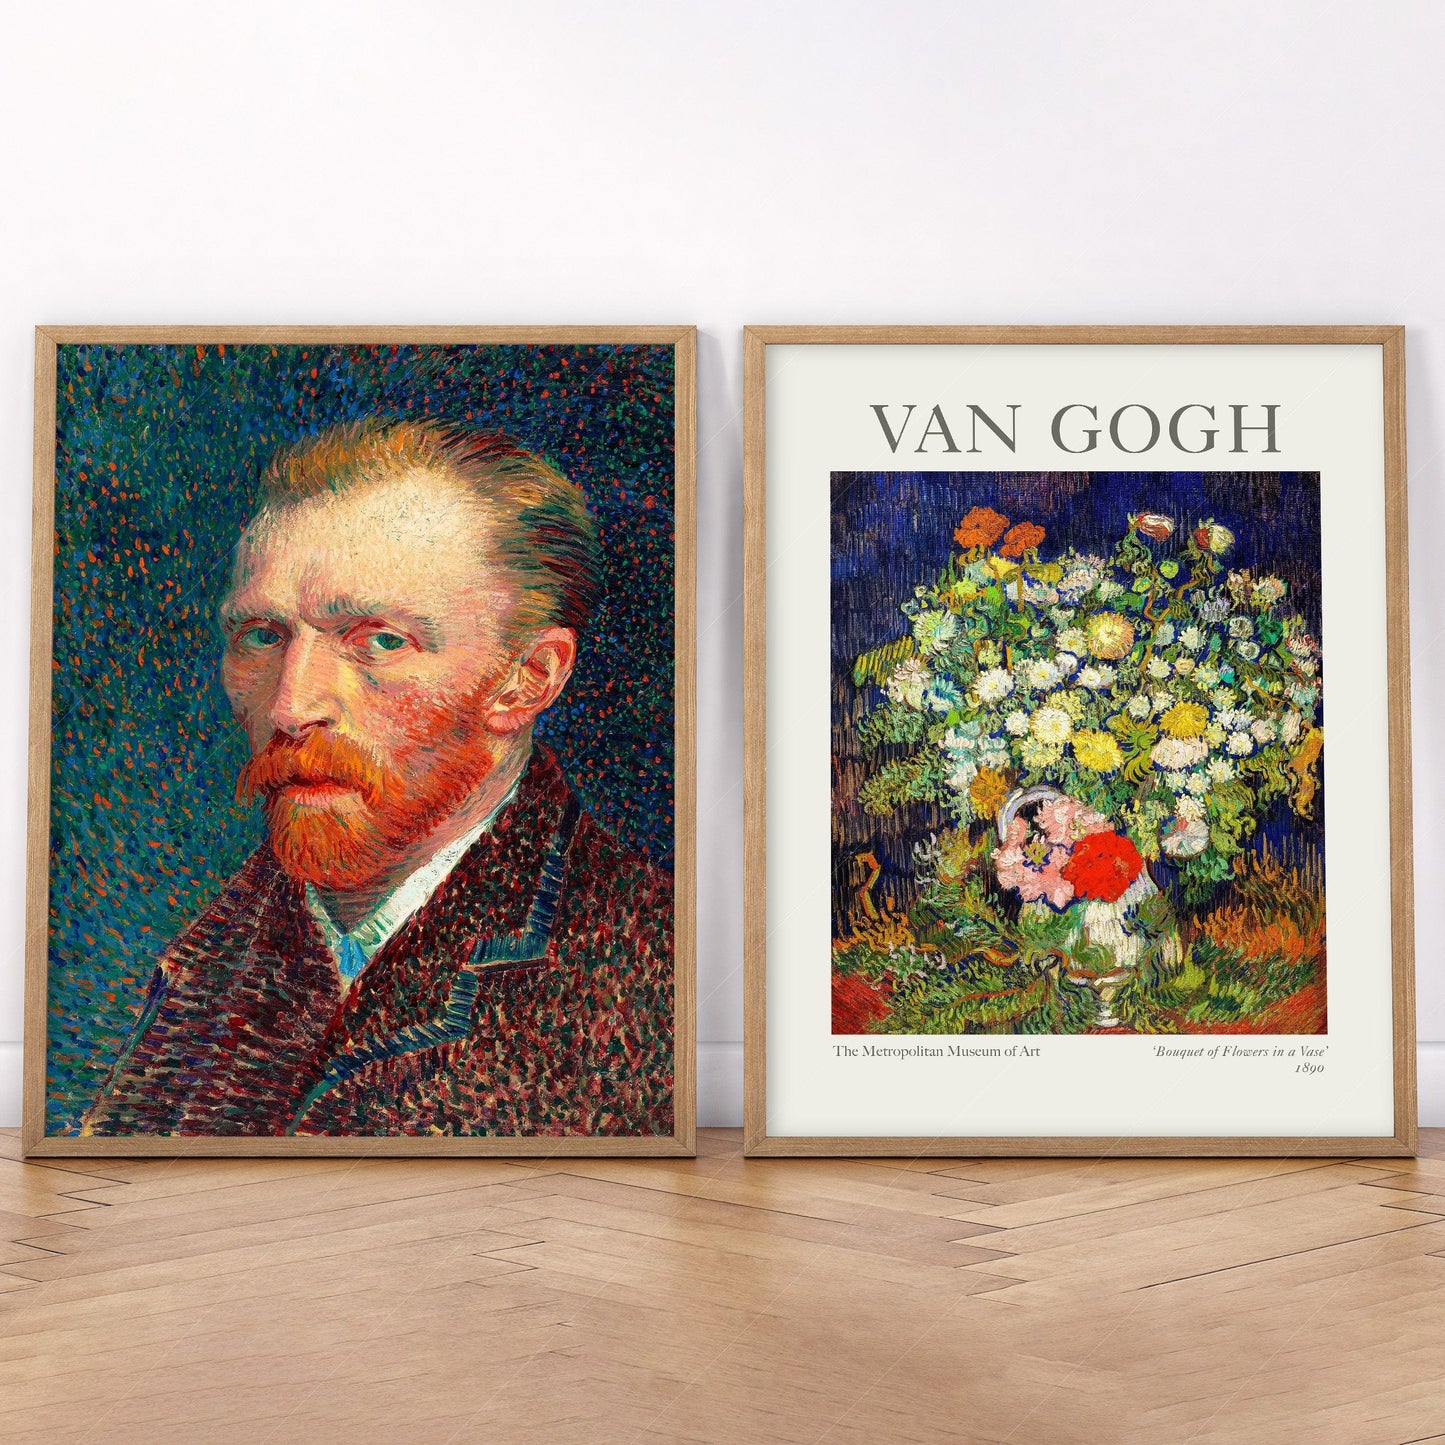 Home Poster Decor Set of 2 Van Gogh print set of 2, Van Gogh Exhibition Poster, Van Gogh Self Portrait, Living Wall Decor, Gift Idea, Office Wall Decor